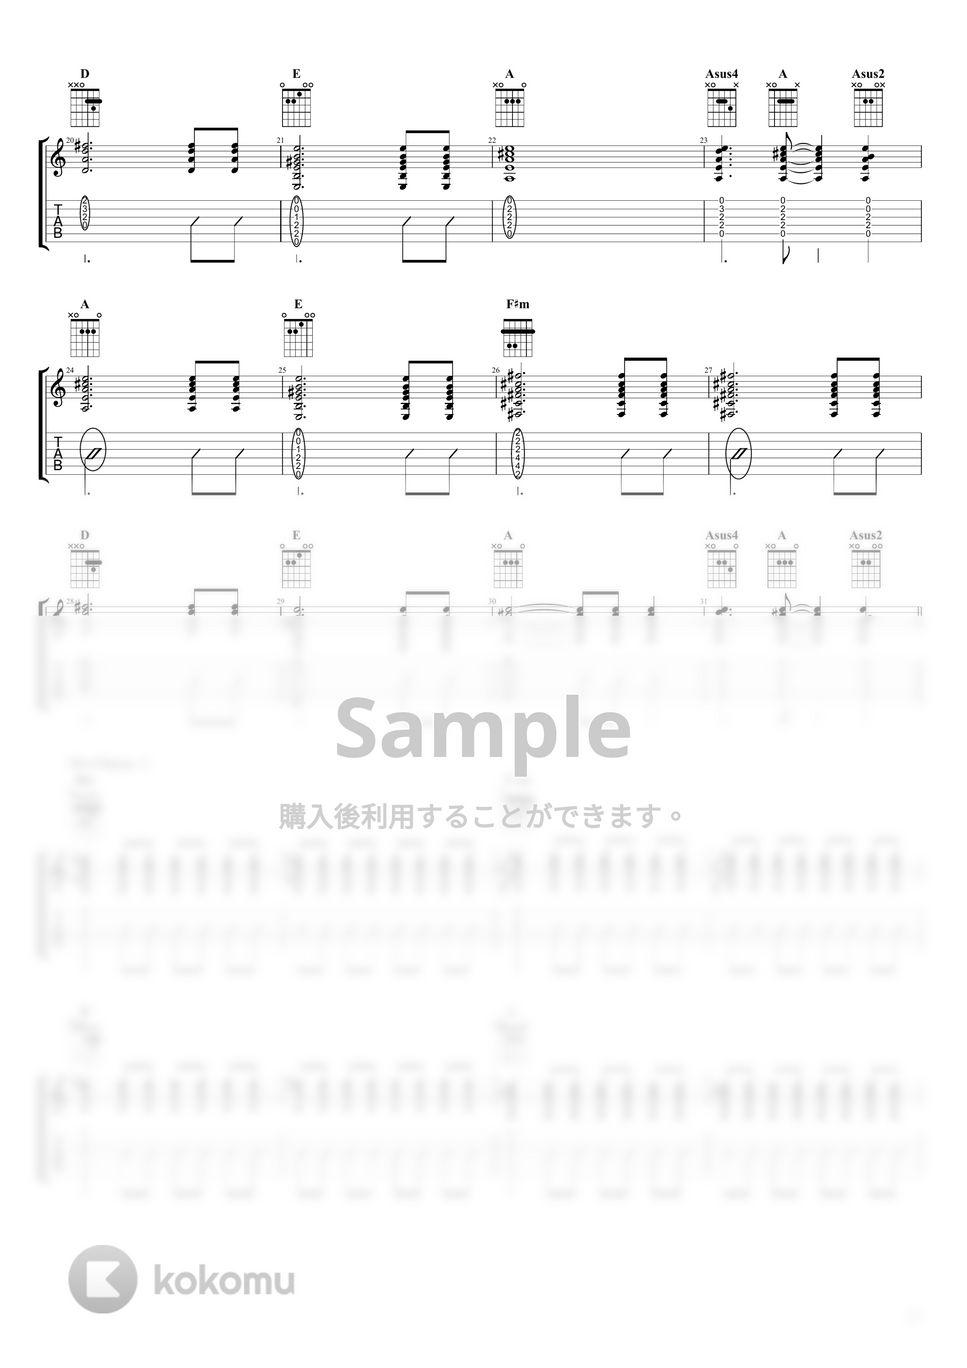 Hump Back - 拝啓、少年よ (ギターPart) by キリギリス